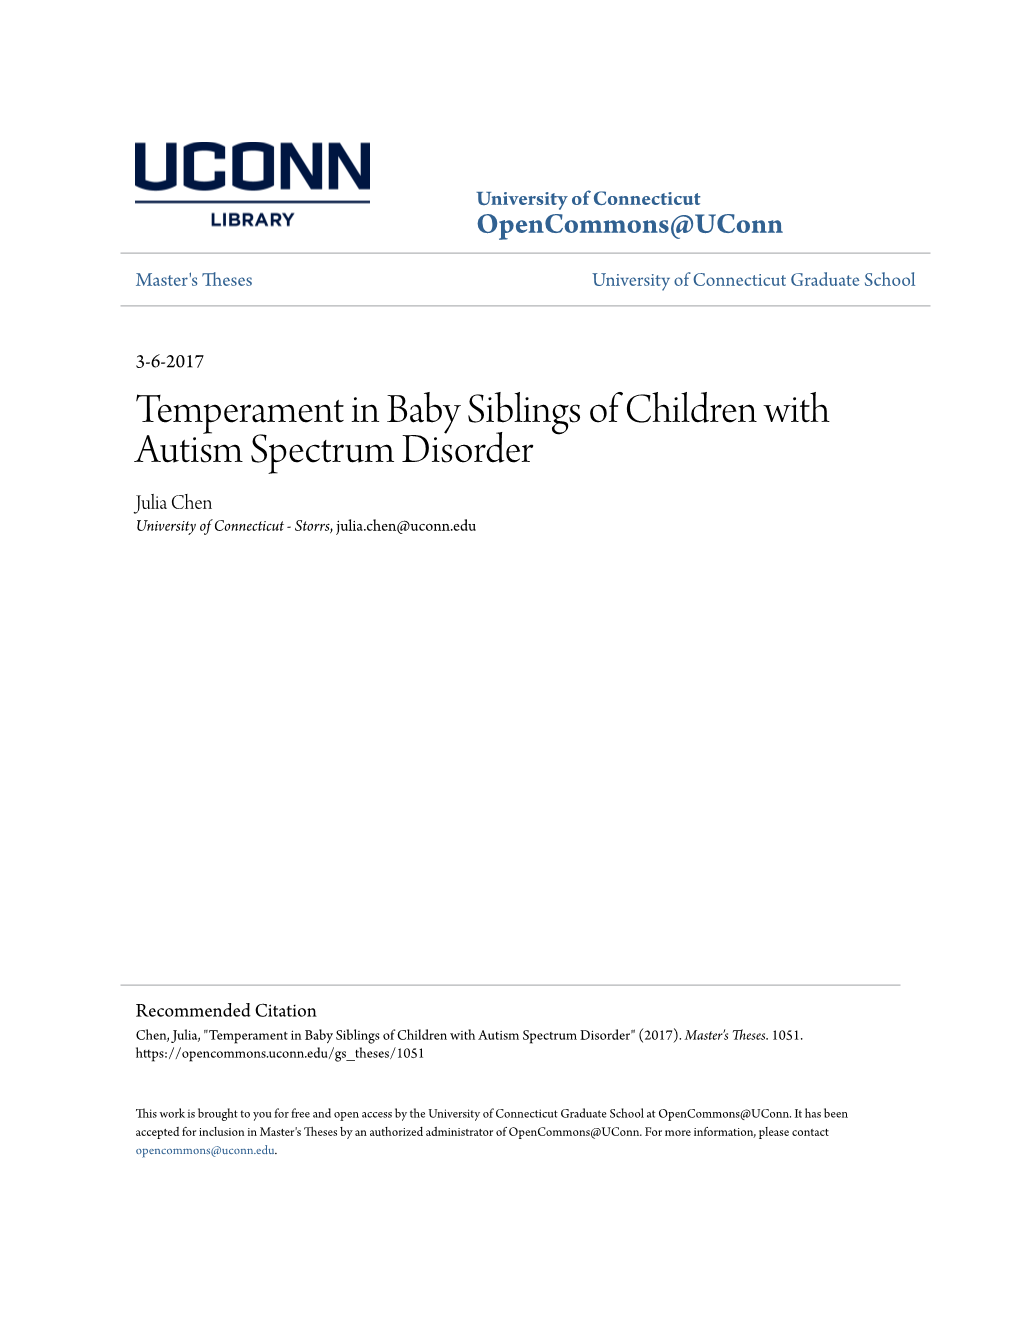 Temperament in Baby Siblings of Children with Autism Spectrum Disorder Julia Chen University of Connecticut - Storrs, Julia.Chen@Uconn.Edu